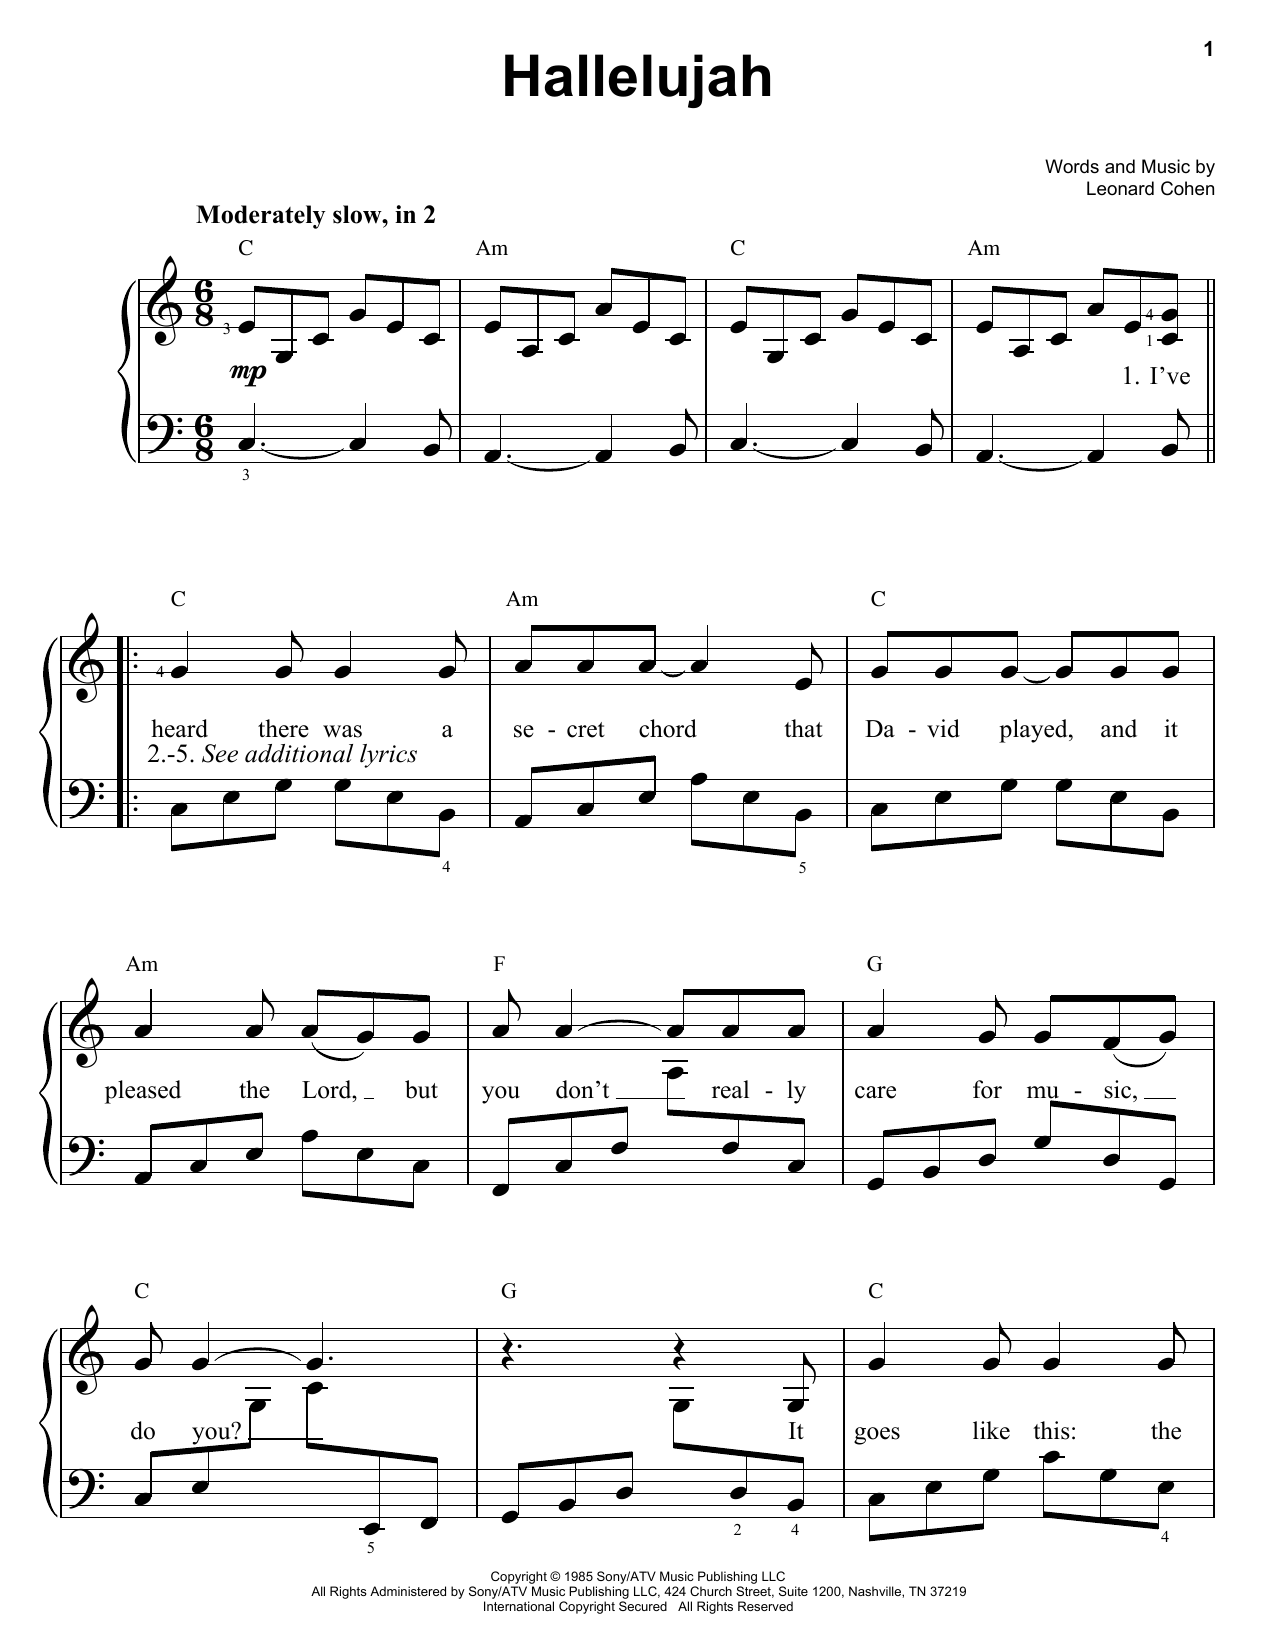 Leonard Cohen Hallelujah Sheet Music Notes & Chords for Guitar Tab - Download or Print PDF